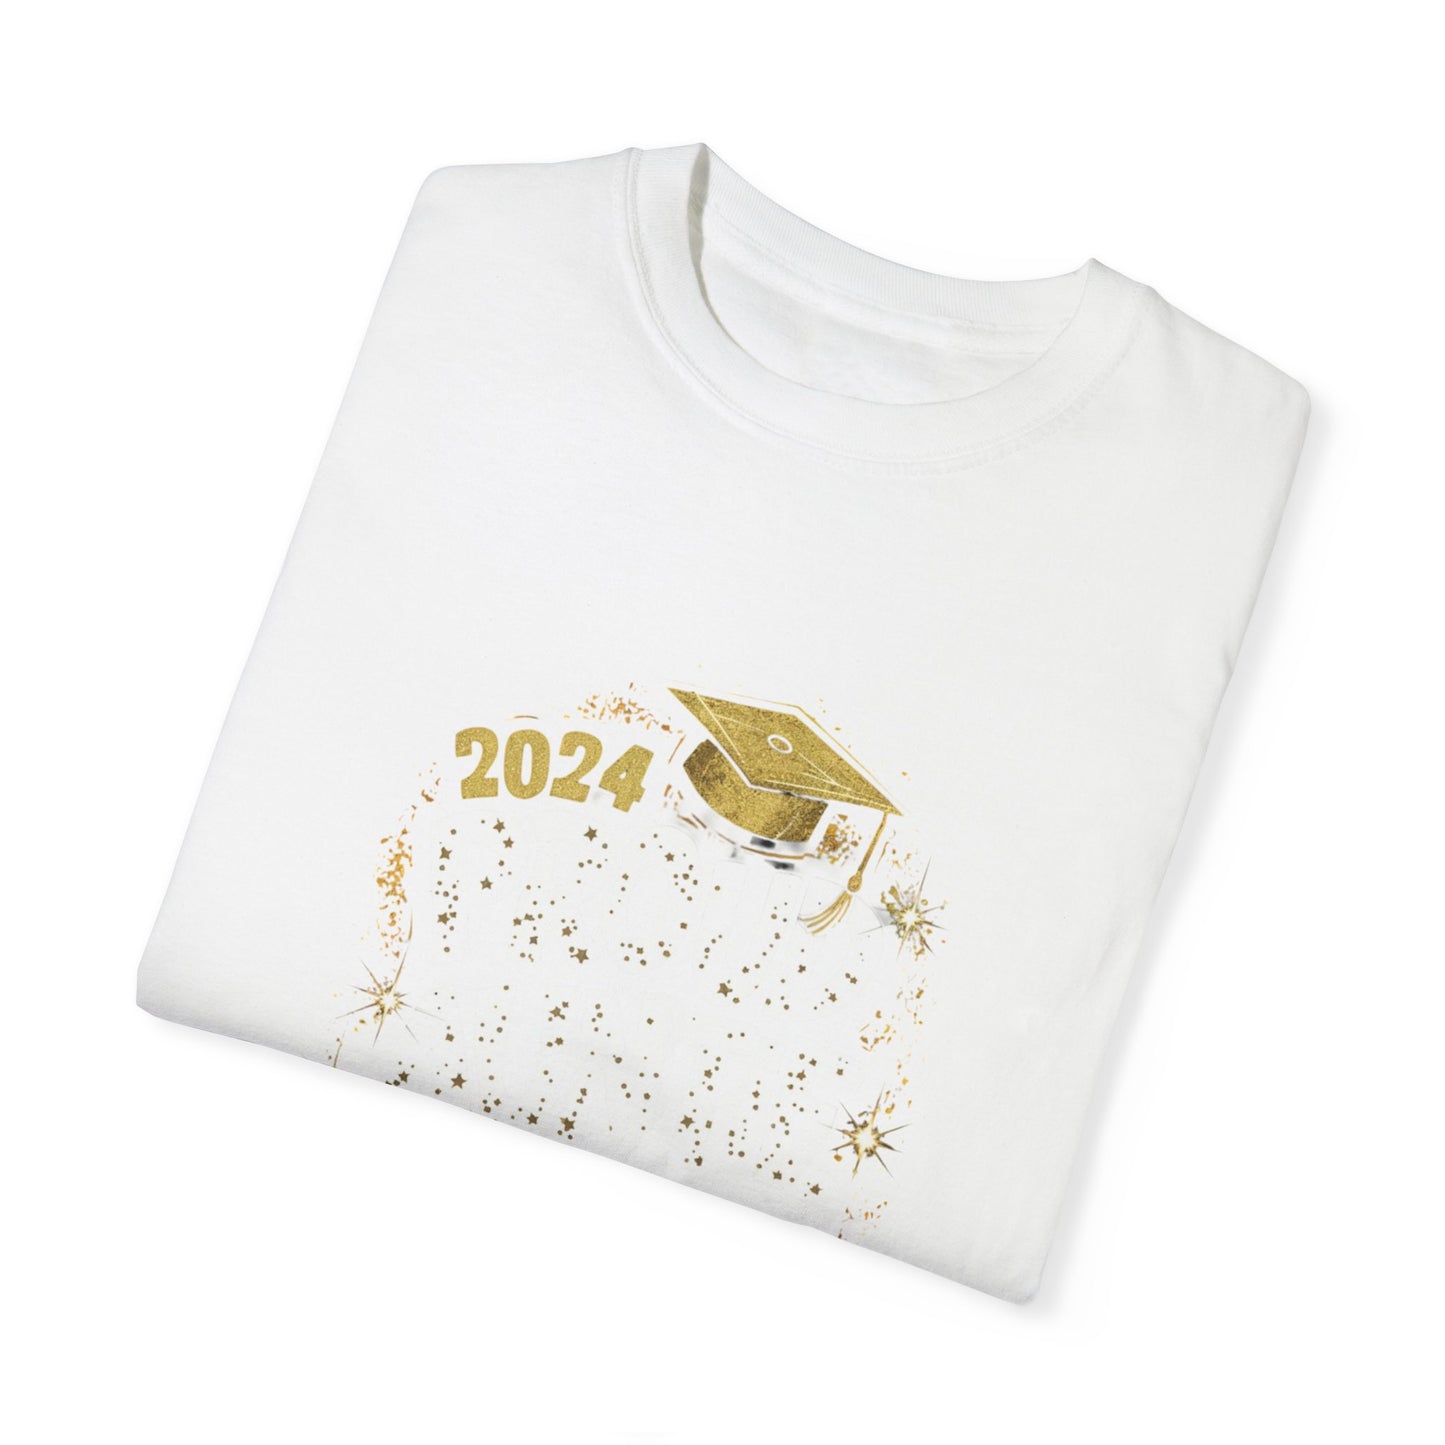 Proud Auntie of a 2024 Graduate Unisex Garment-dyed T-shirt Cotton Funny Humorous Graphic Soft Premium Unisex Men Women White T-shirt Birthday Gift-23